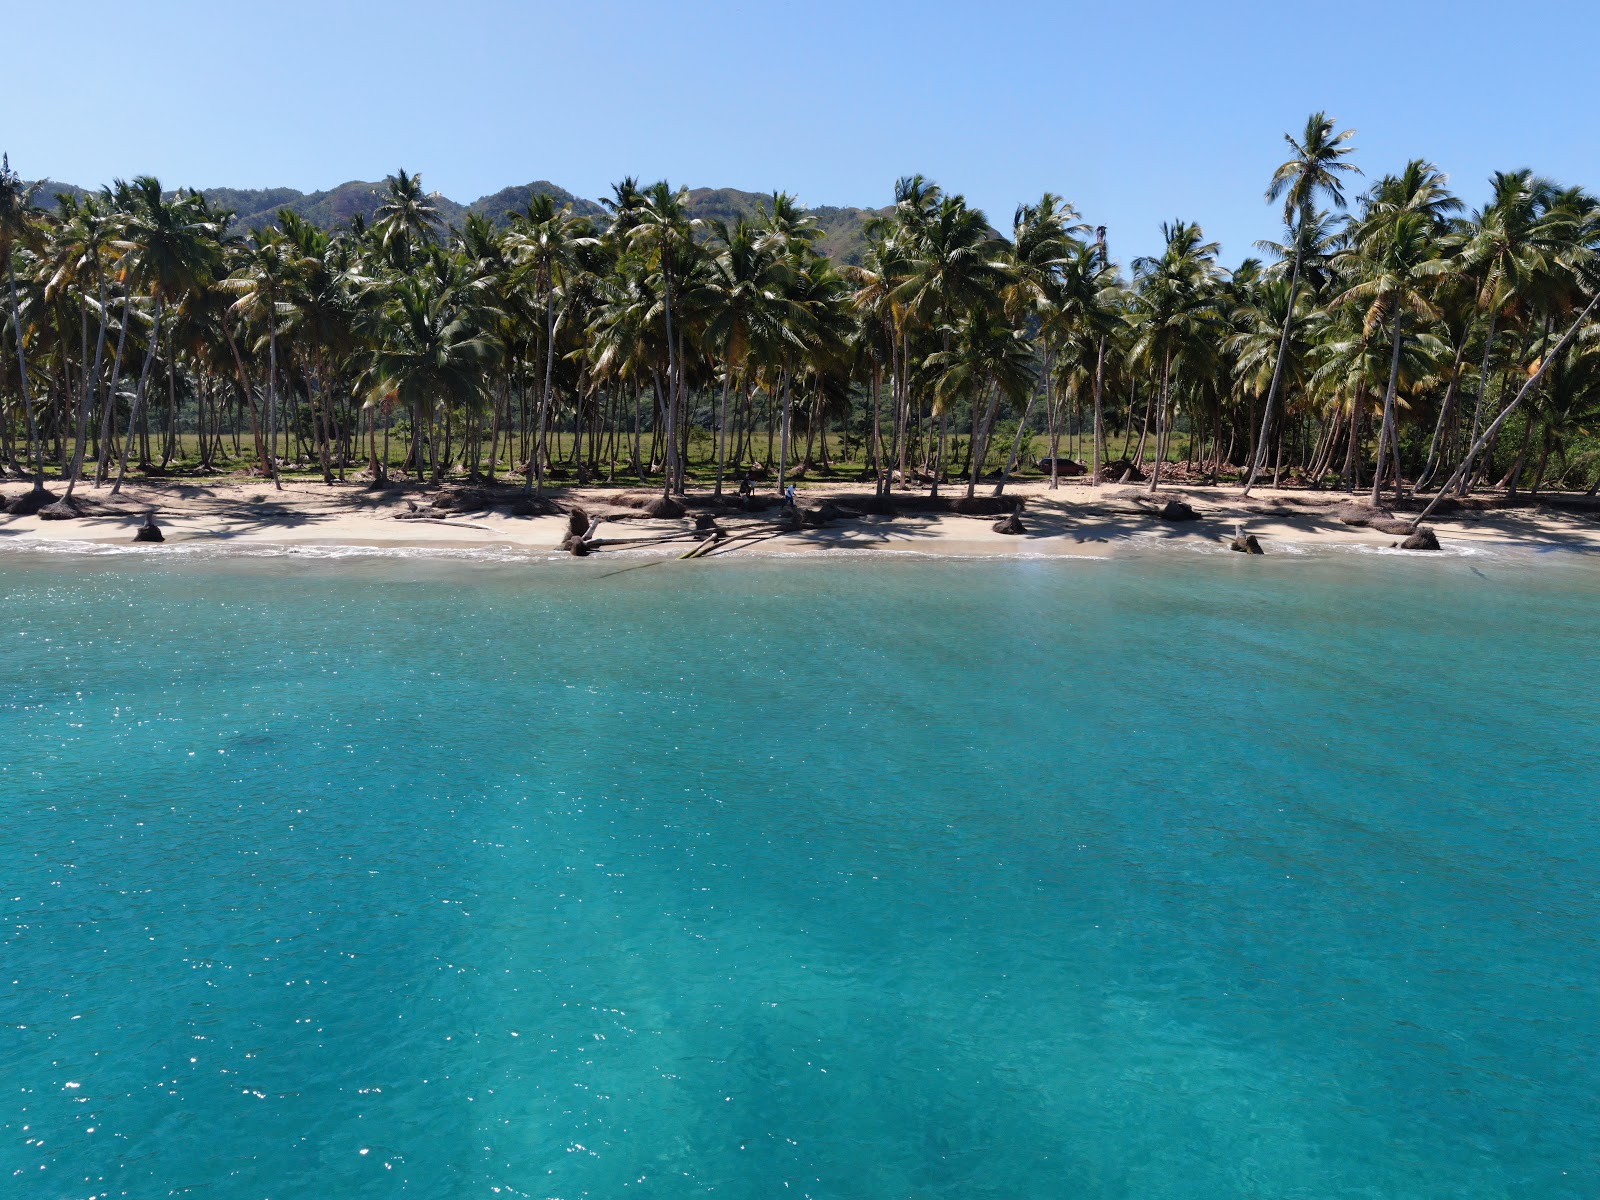 Fotografija Playa Las Majaguas z turkizna čista voda površino